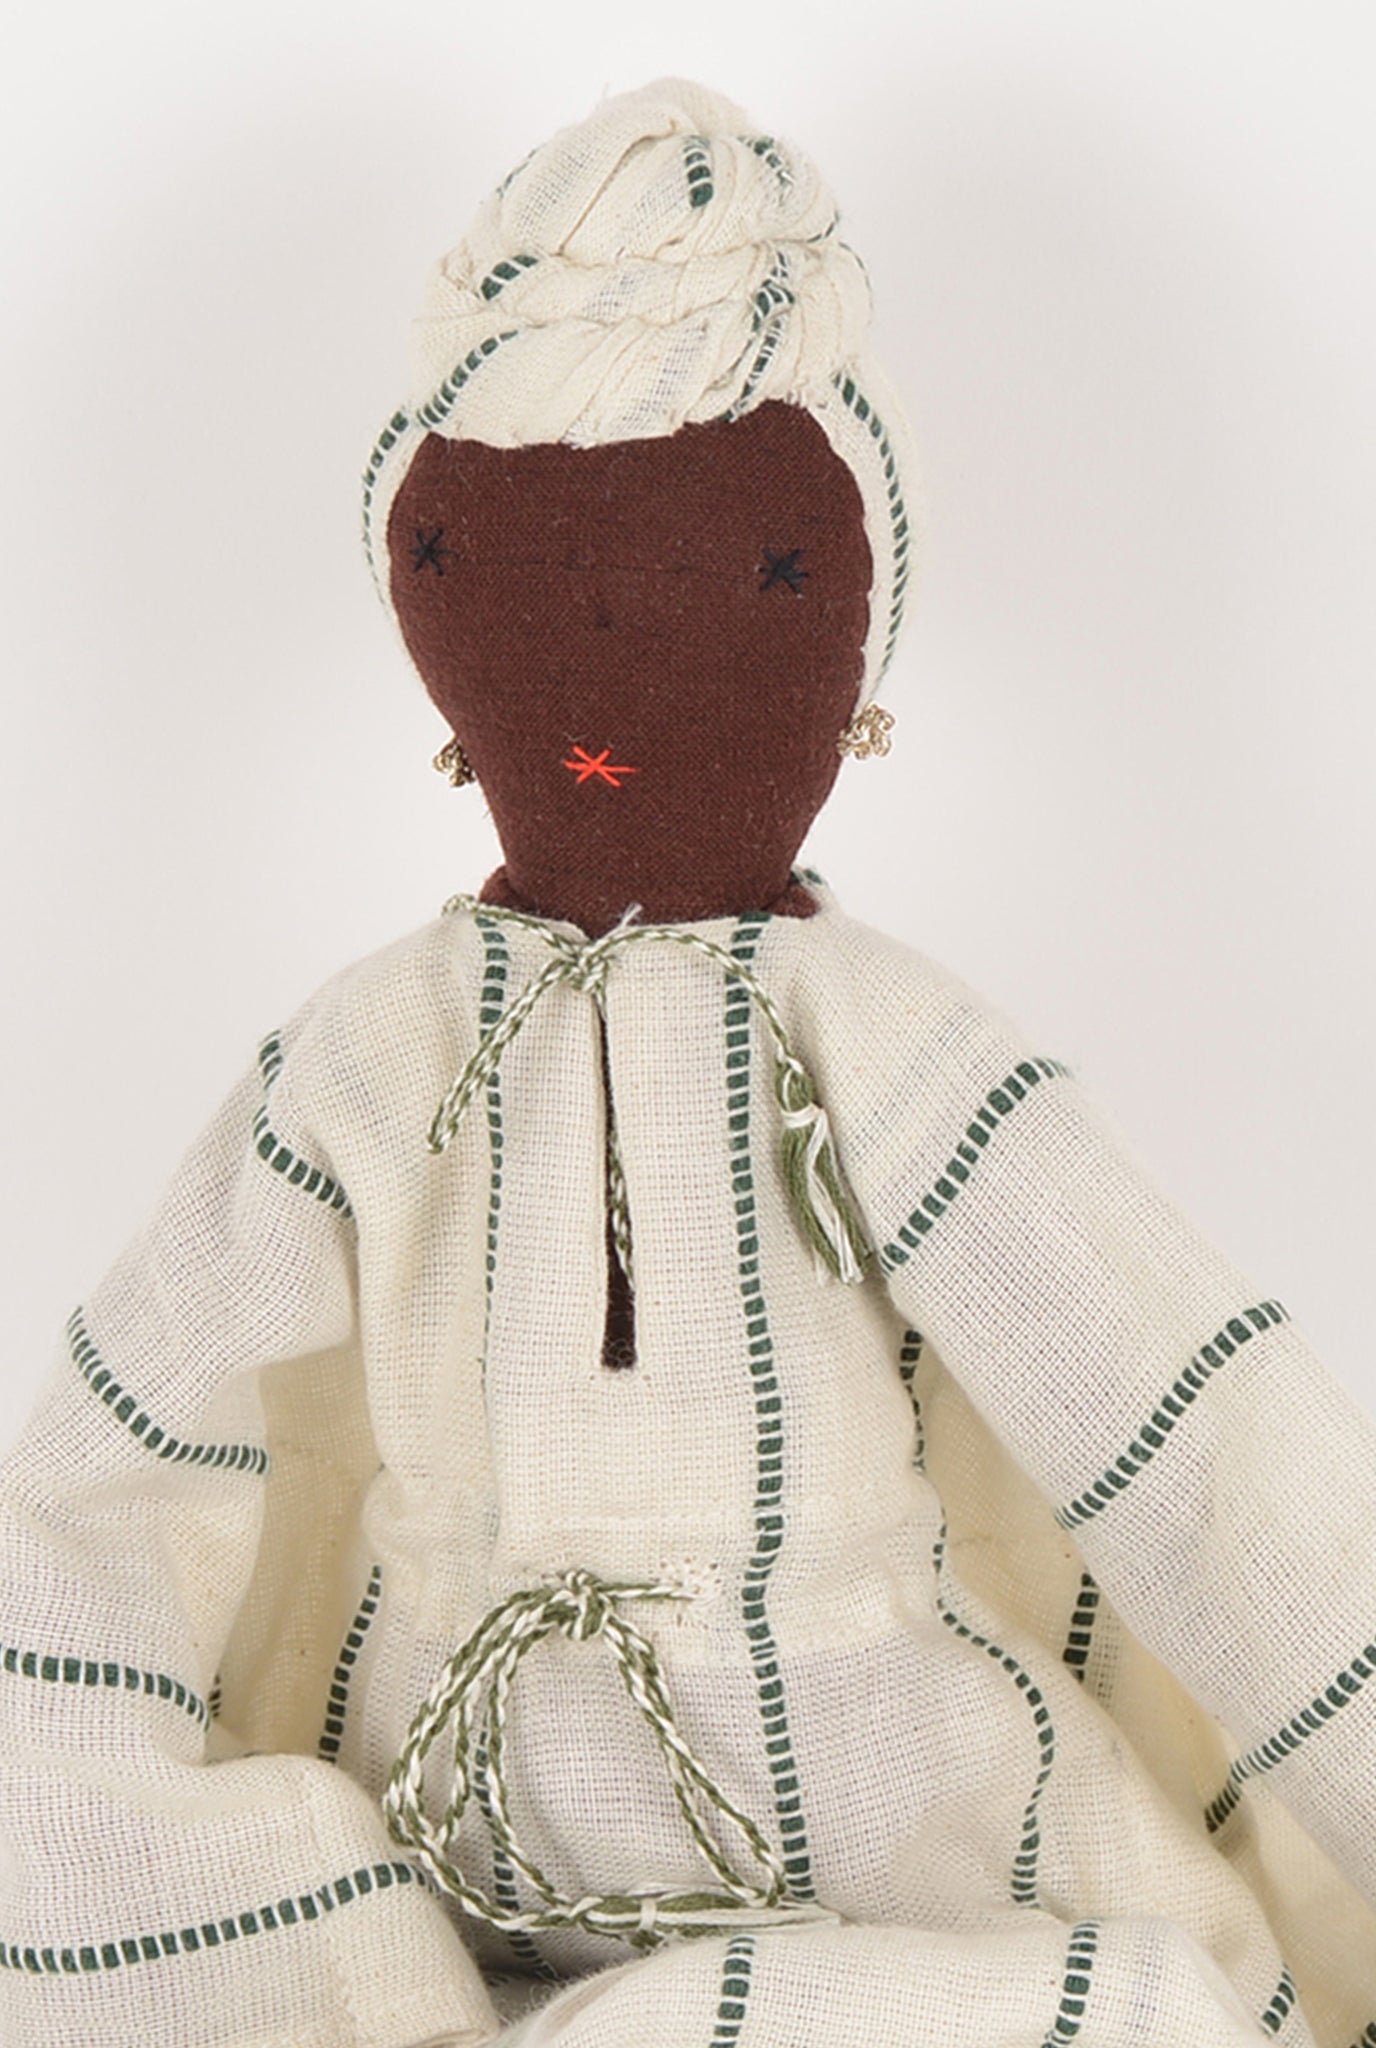 handcrafted- jodi-dolls- afghan-woman- refugees